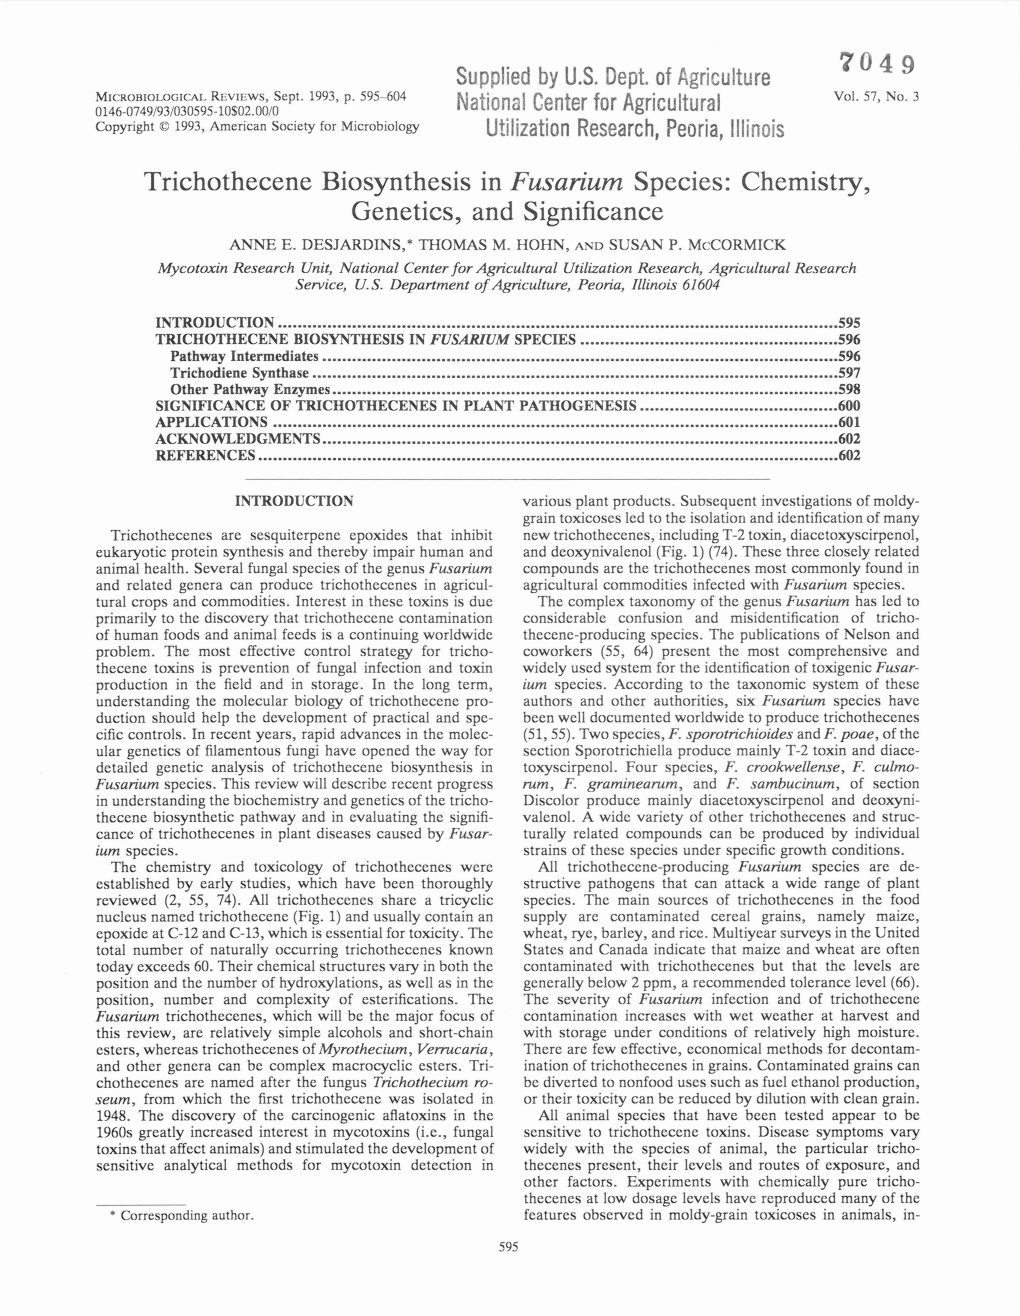 Trichothecene Biosynthesis in Fusarium Species: Chemistry, Genetics, and Significance